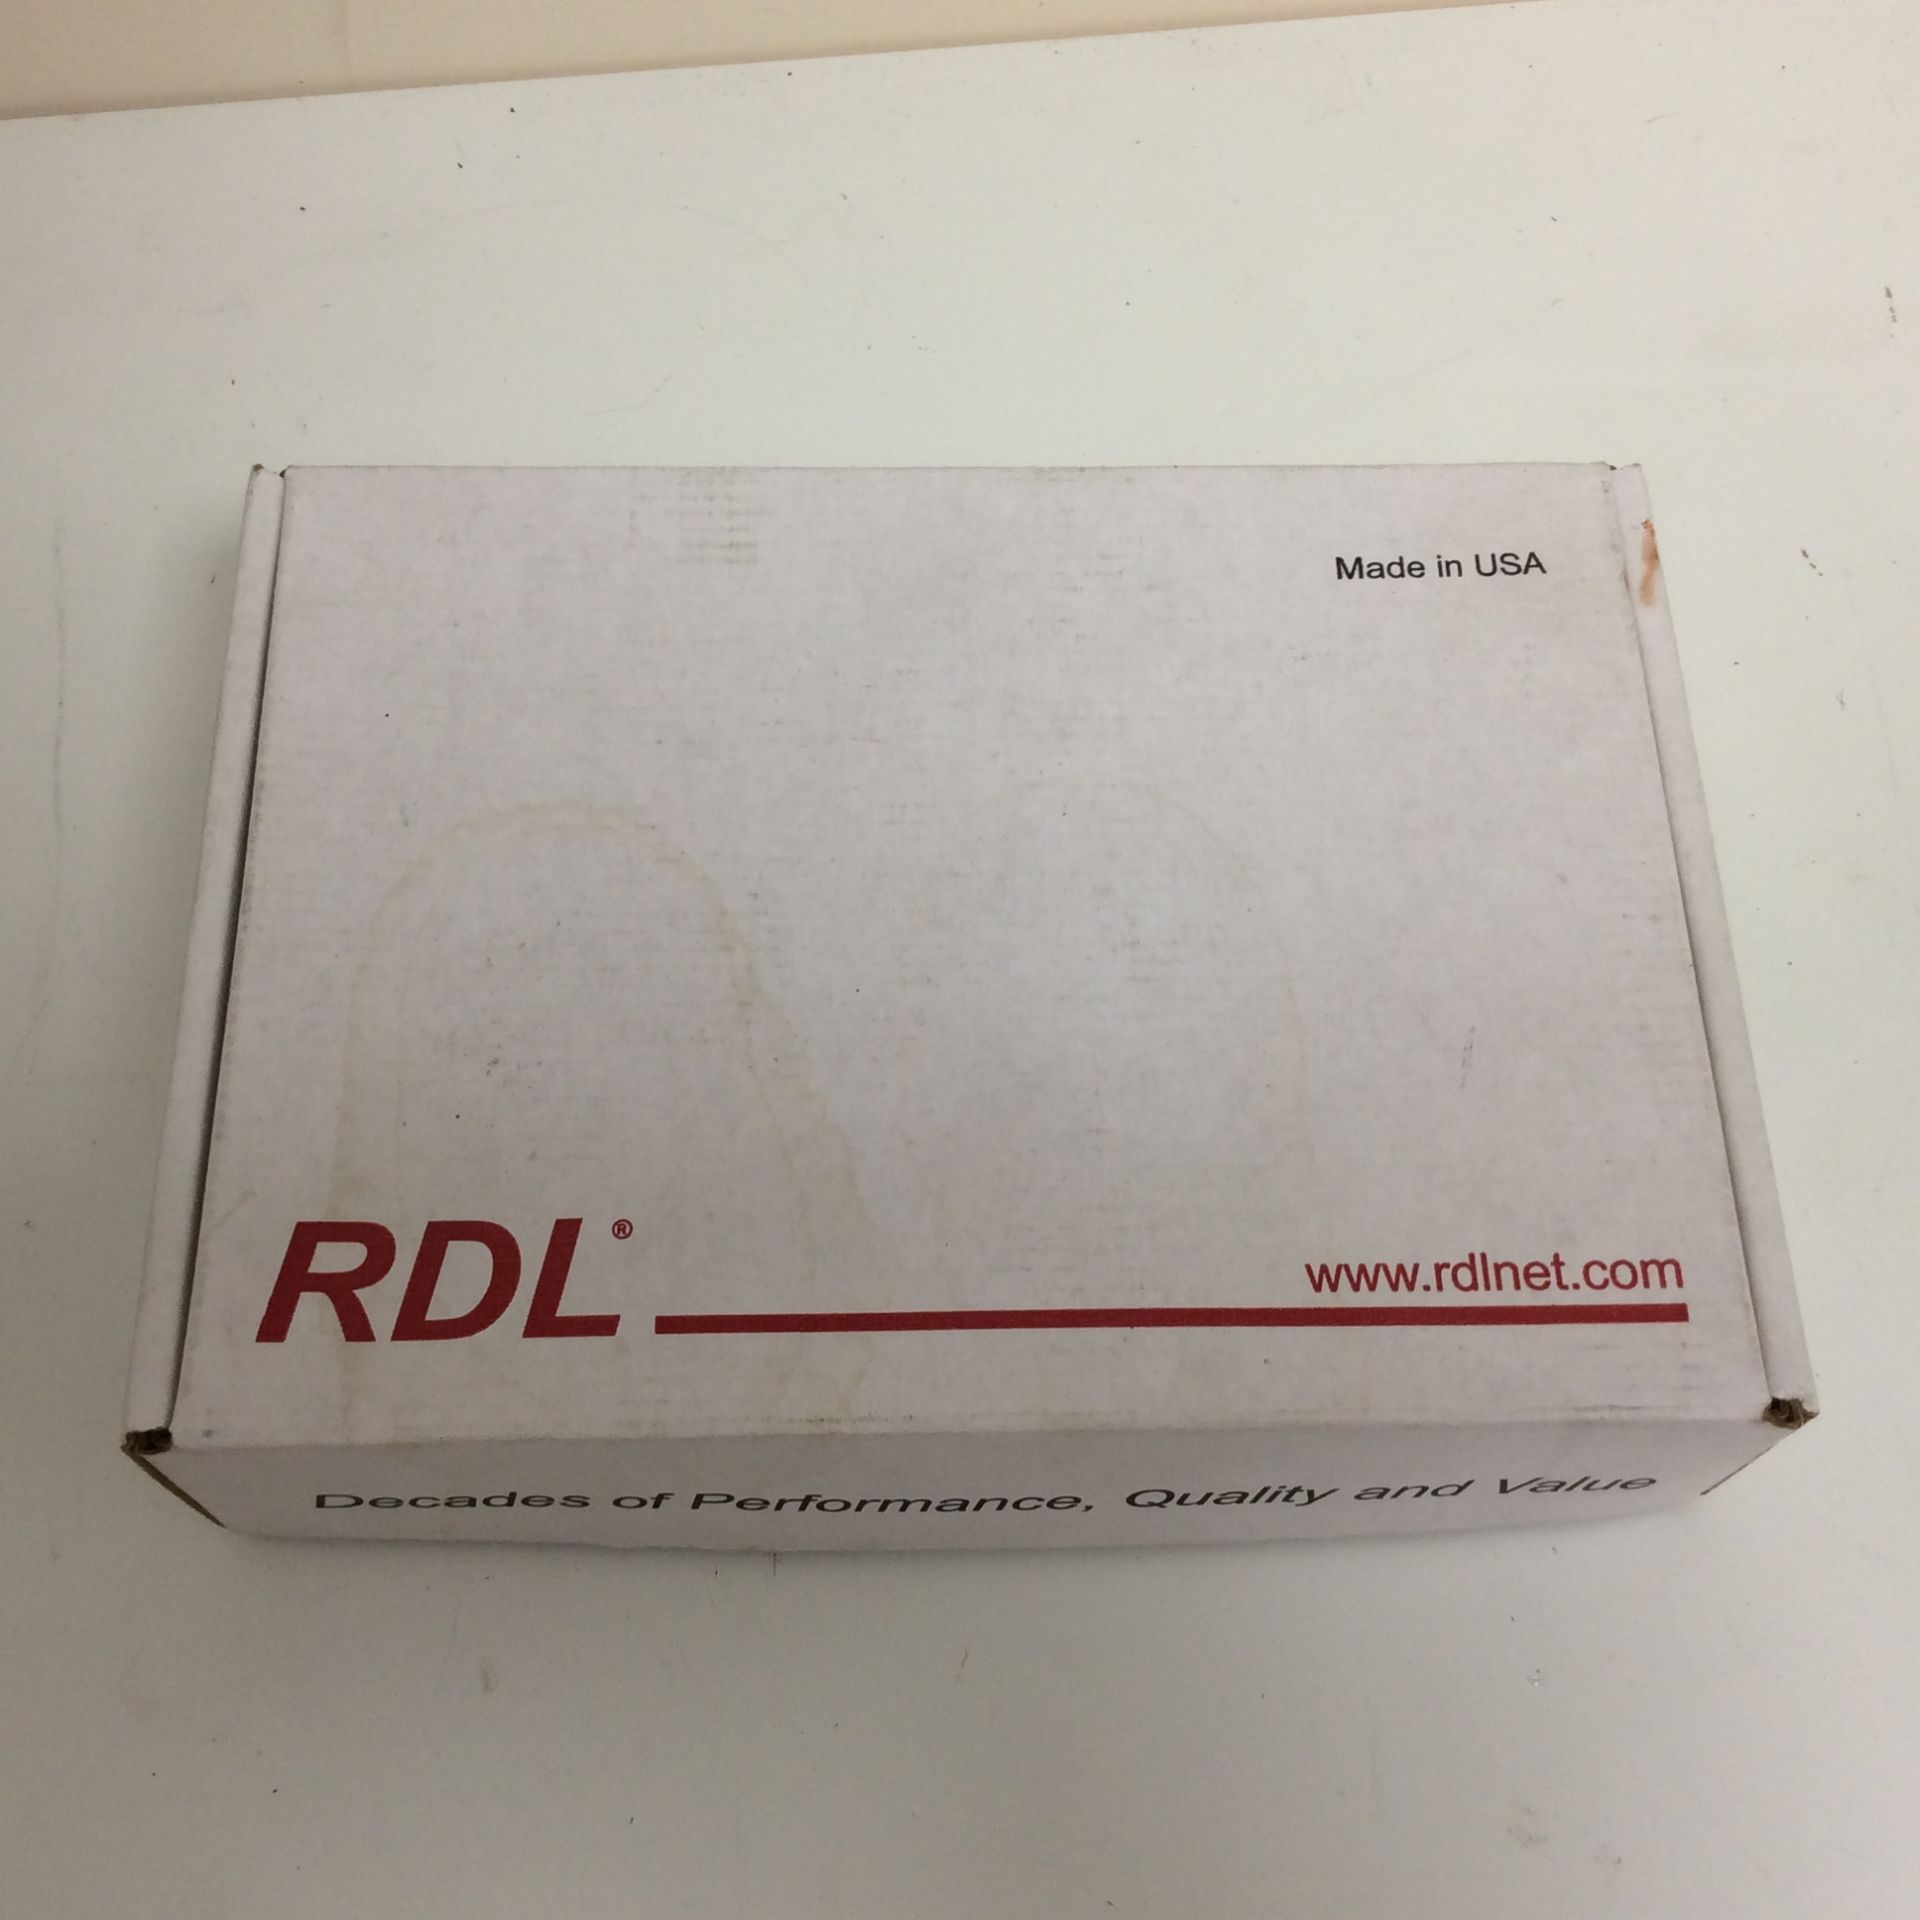 Rdl ez-vmd4x vga/xga distribution amplifier (boxed)